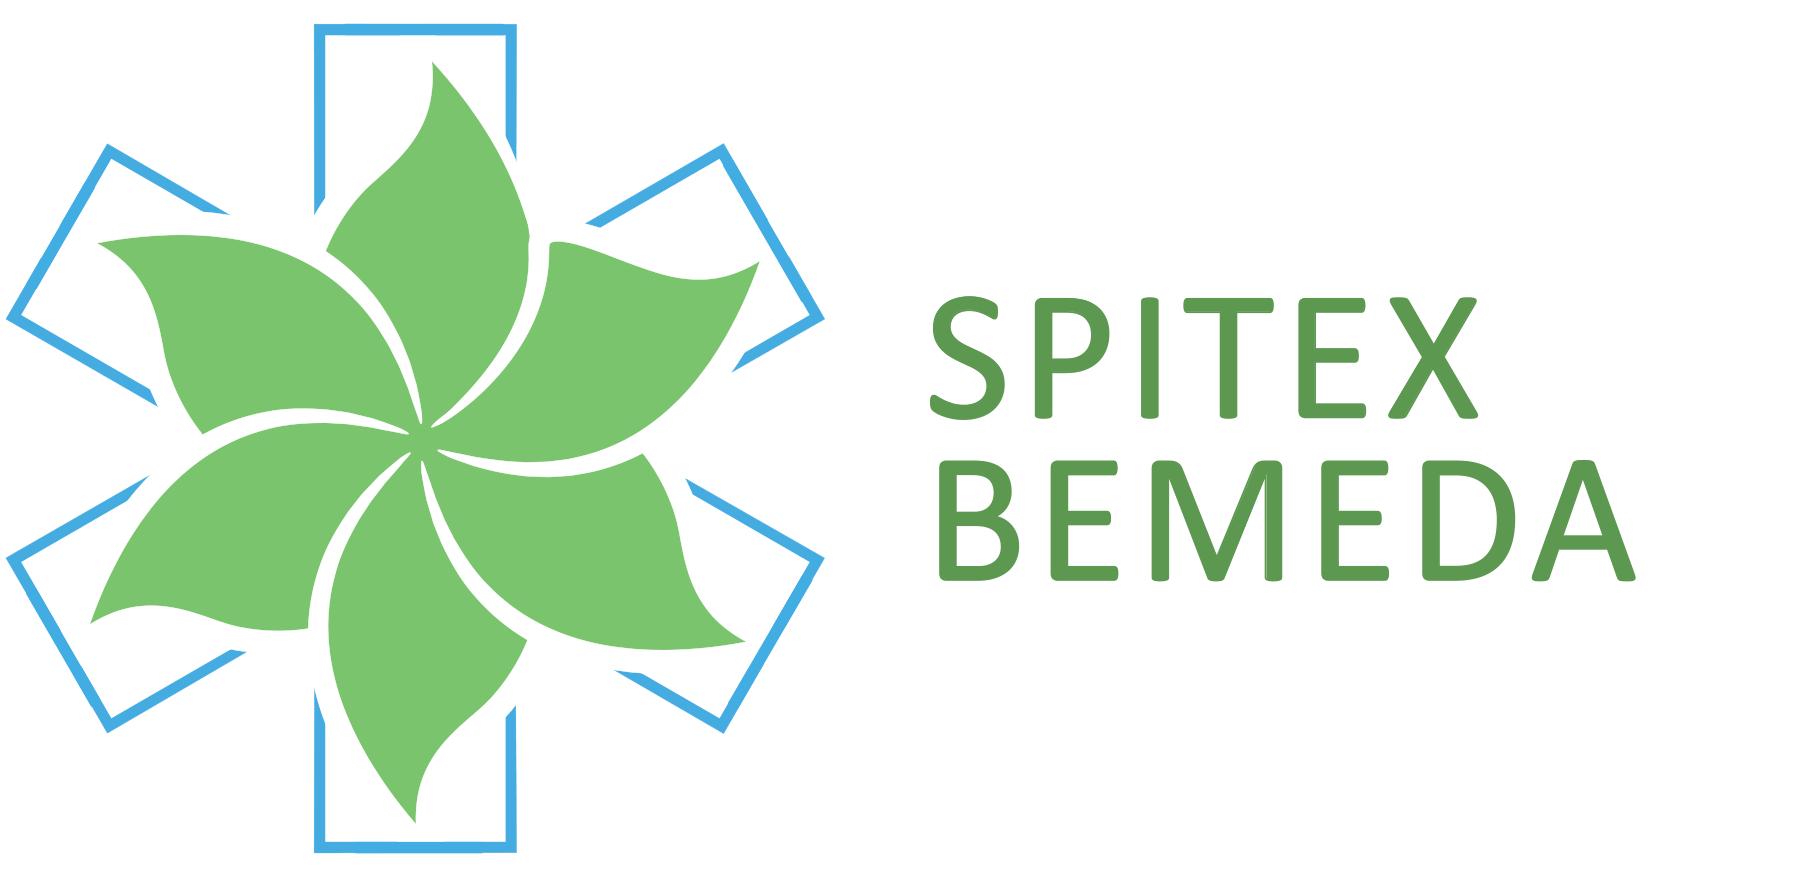 Spitex Bemeda